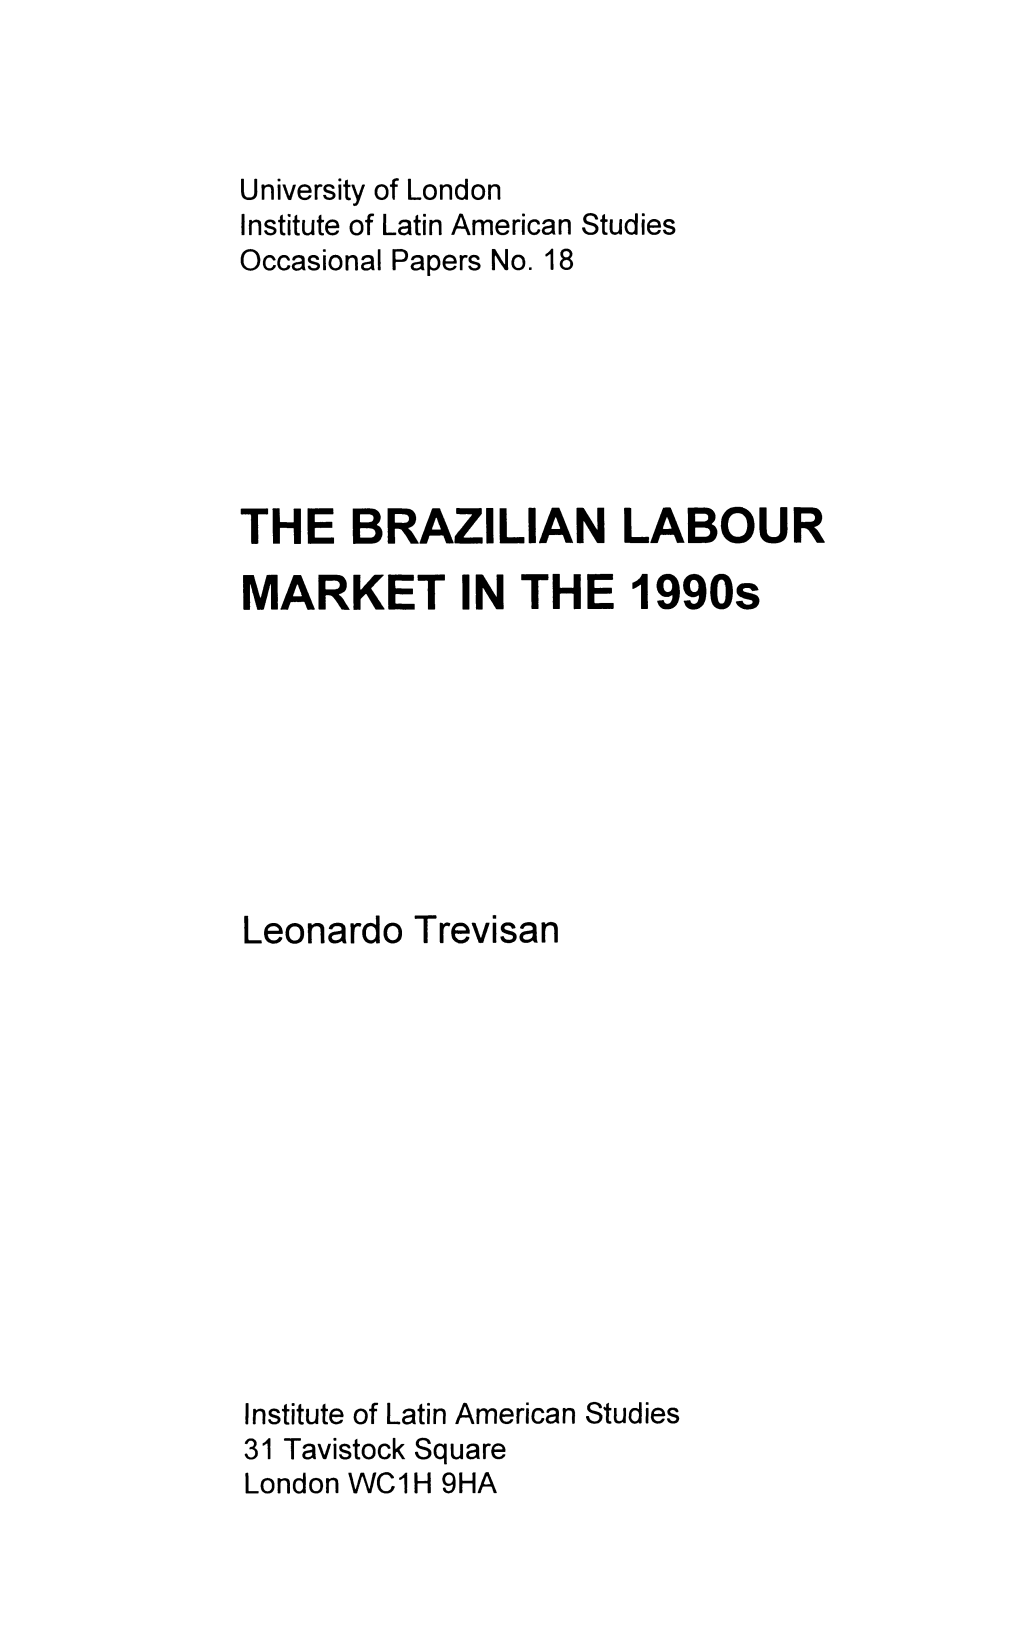 THE BRAZILIAN LABOUR MARKET in the 1990S